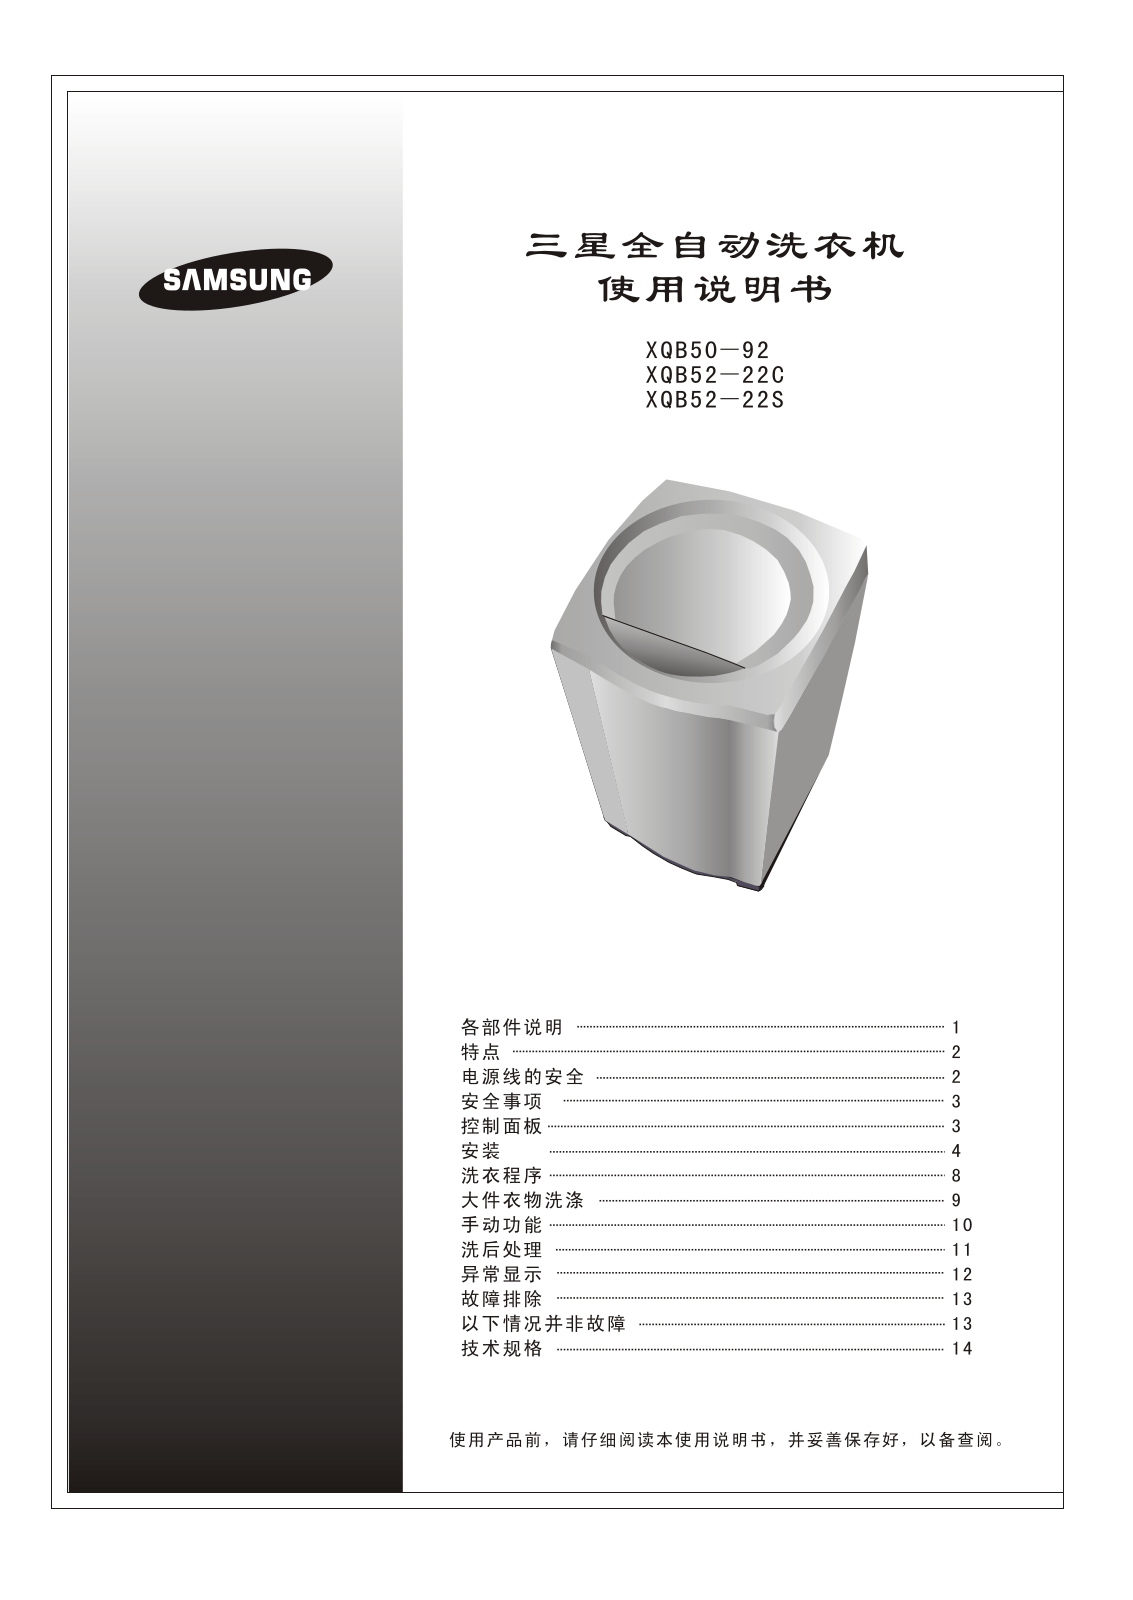 Samsung XQB52-22S User Manual